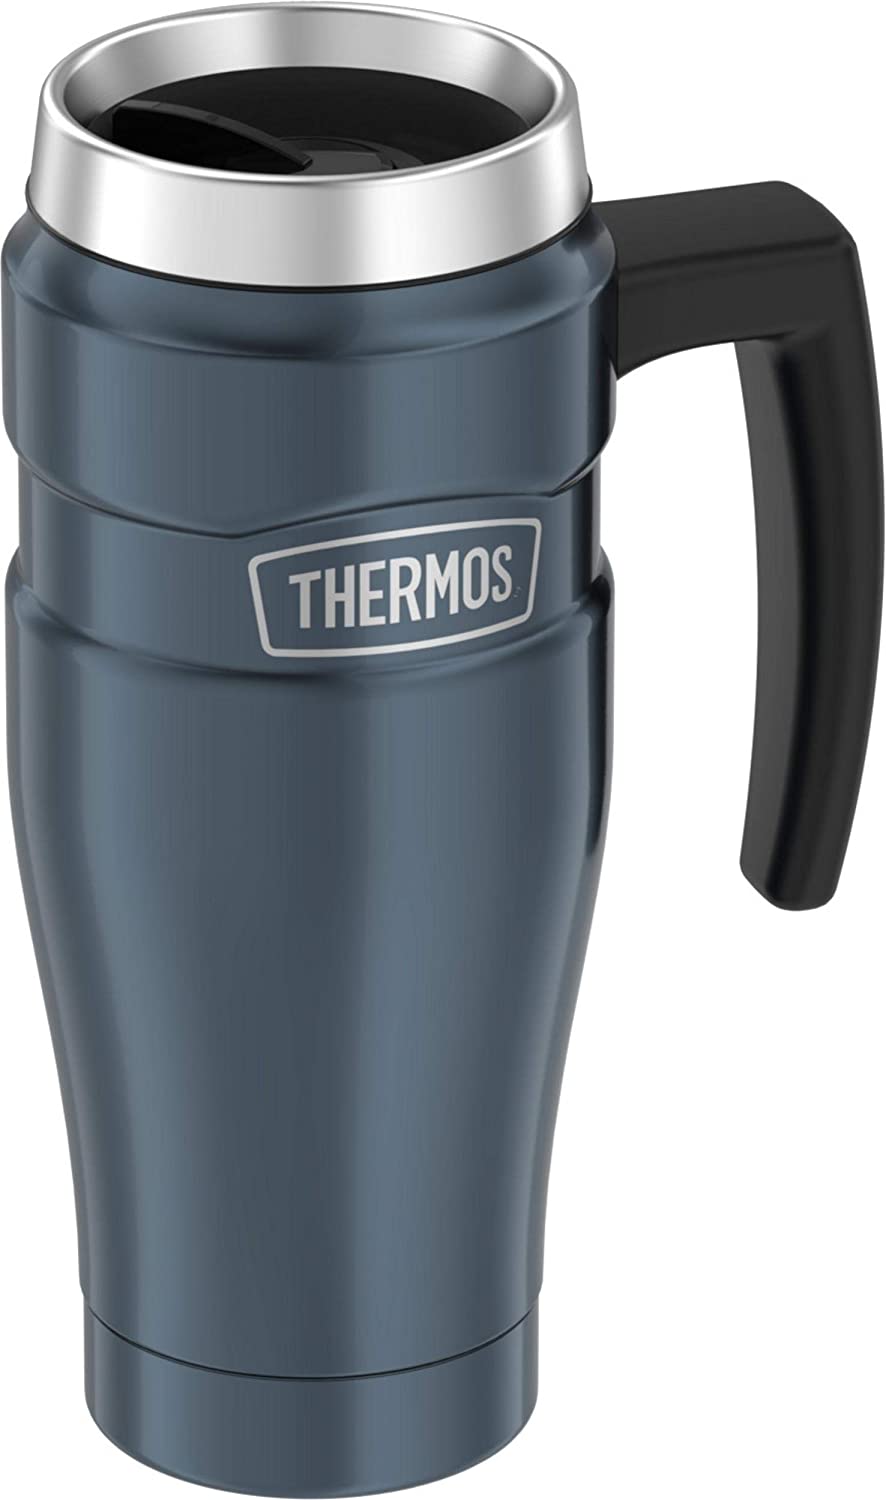 https://www.dontwasteyourmoney.com/wp-content/uploads/2021/05/thermos-stainless-king-handle-travel-mug-16-ounce-travel-coffee-mug.jpg